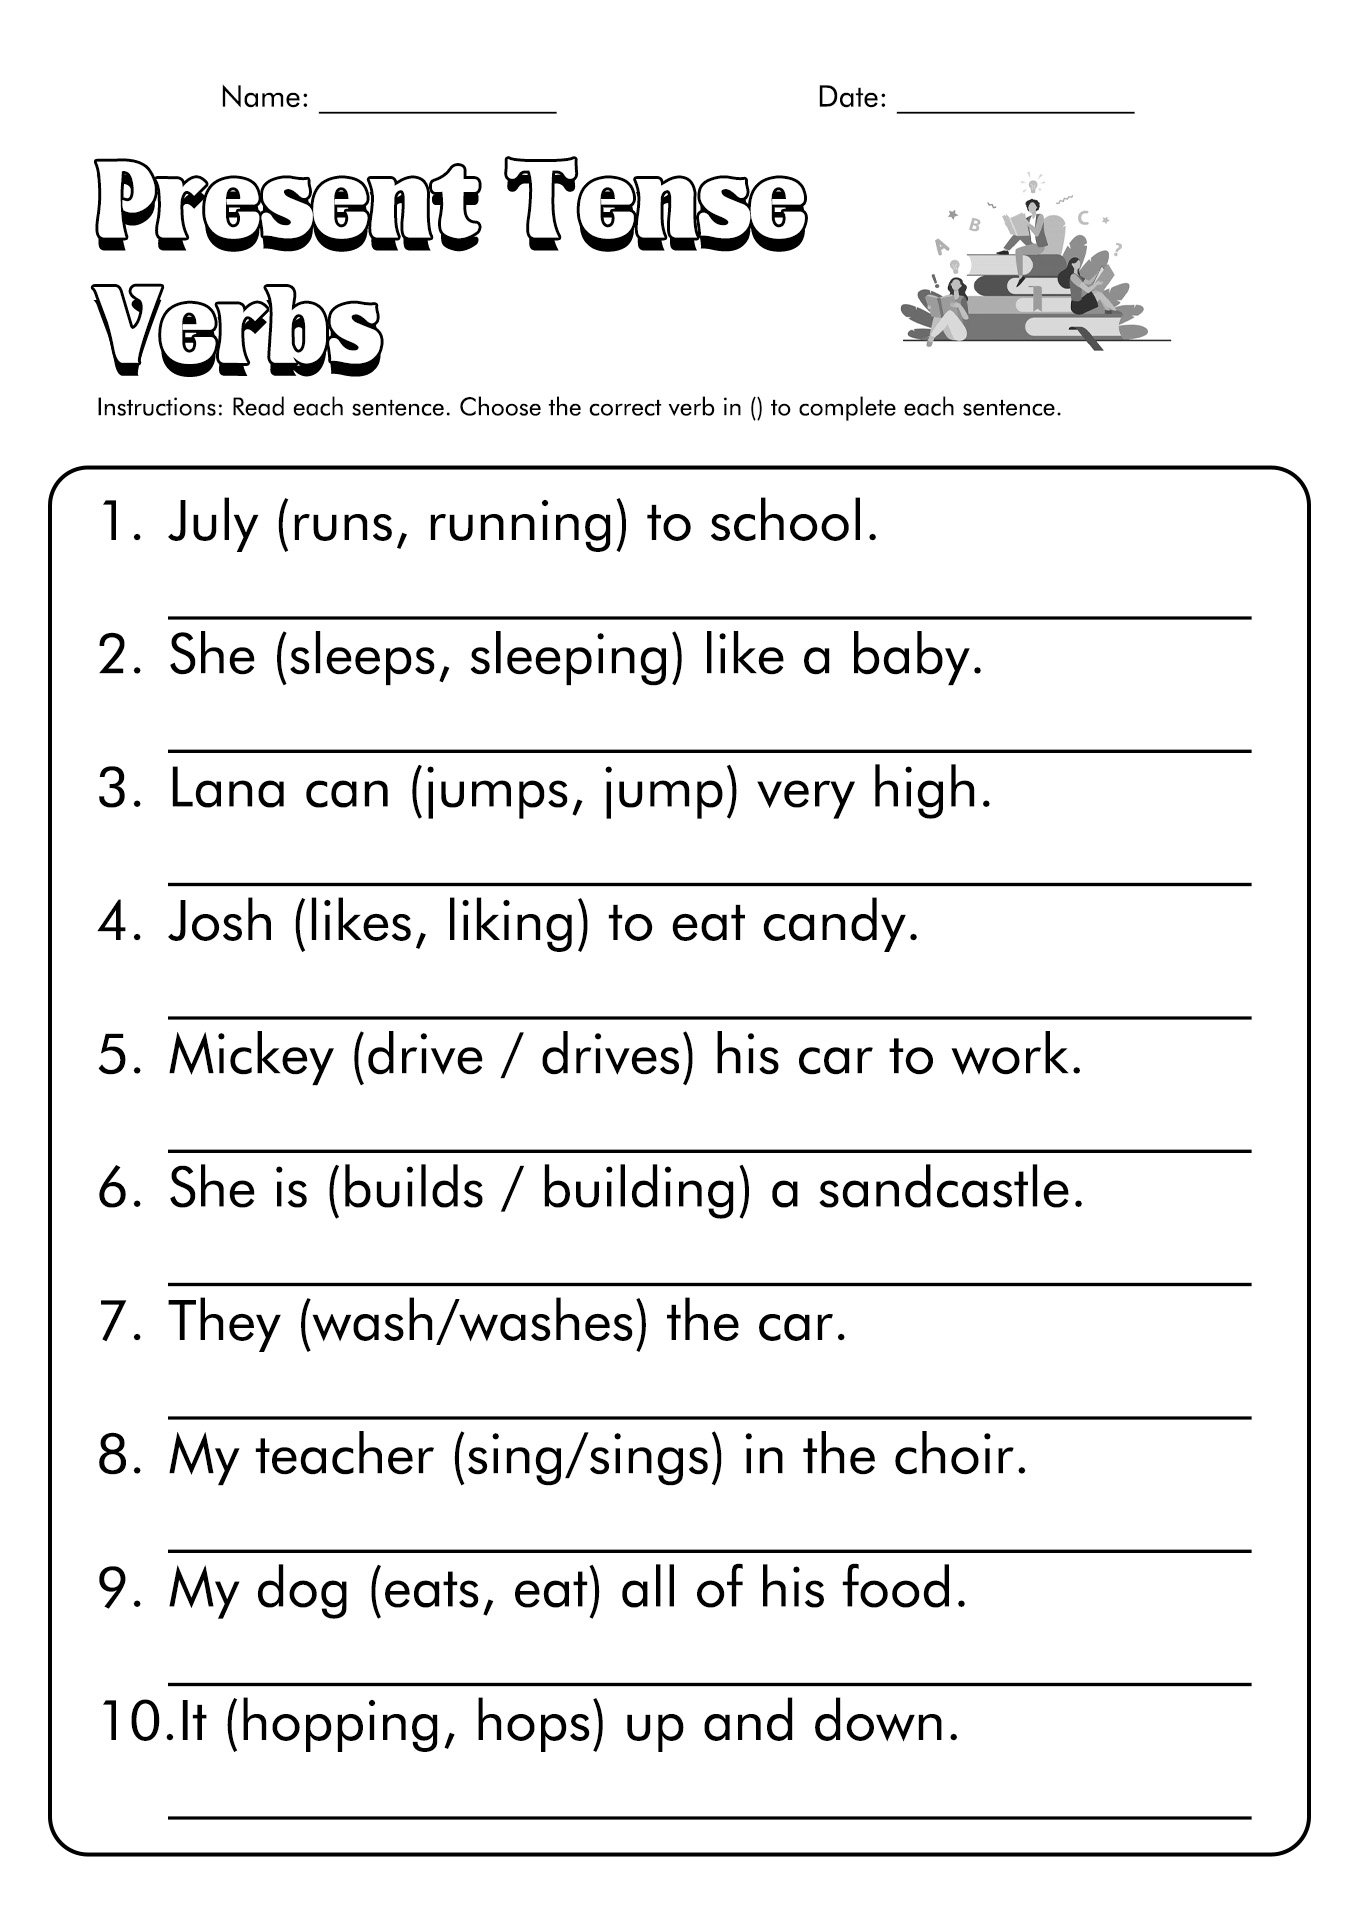 verb-tense-worksheets-worksheet-past-tense-verb-liveworksheets-link-worksheet-ideas